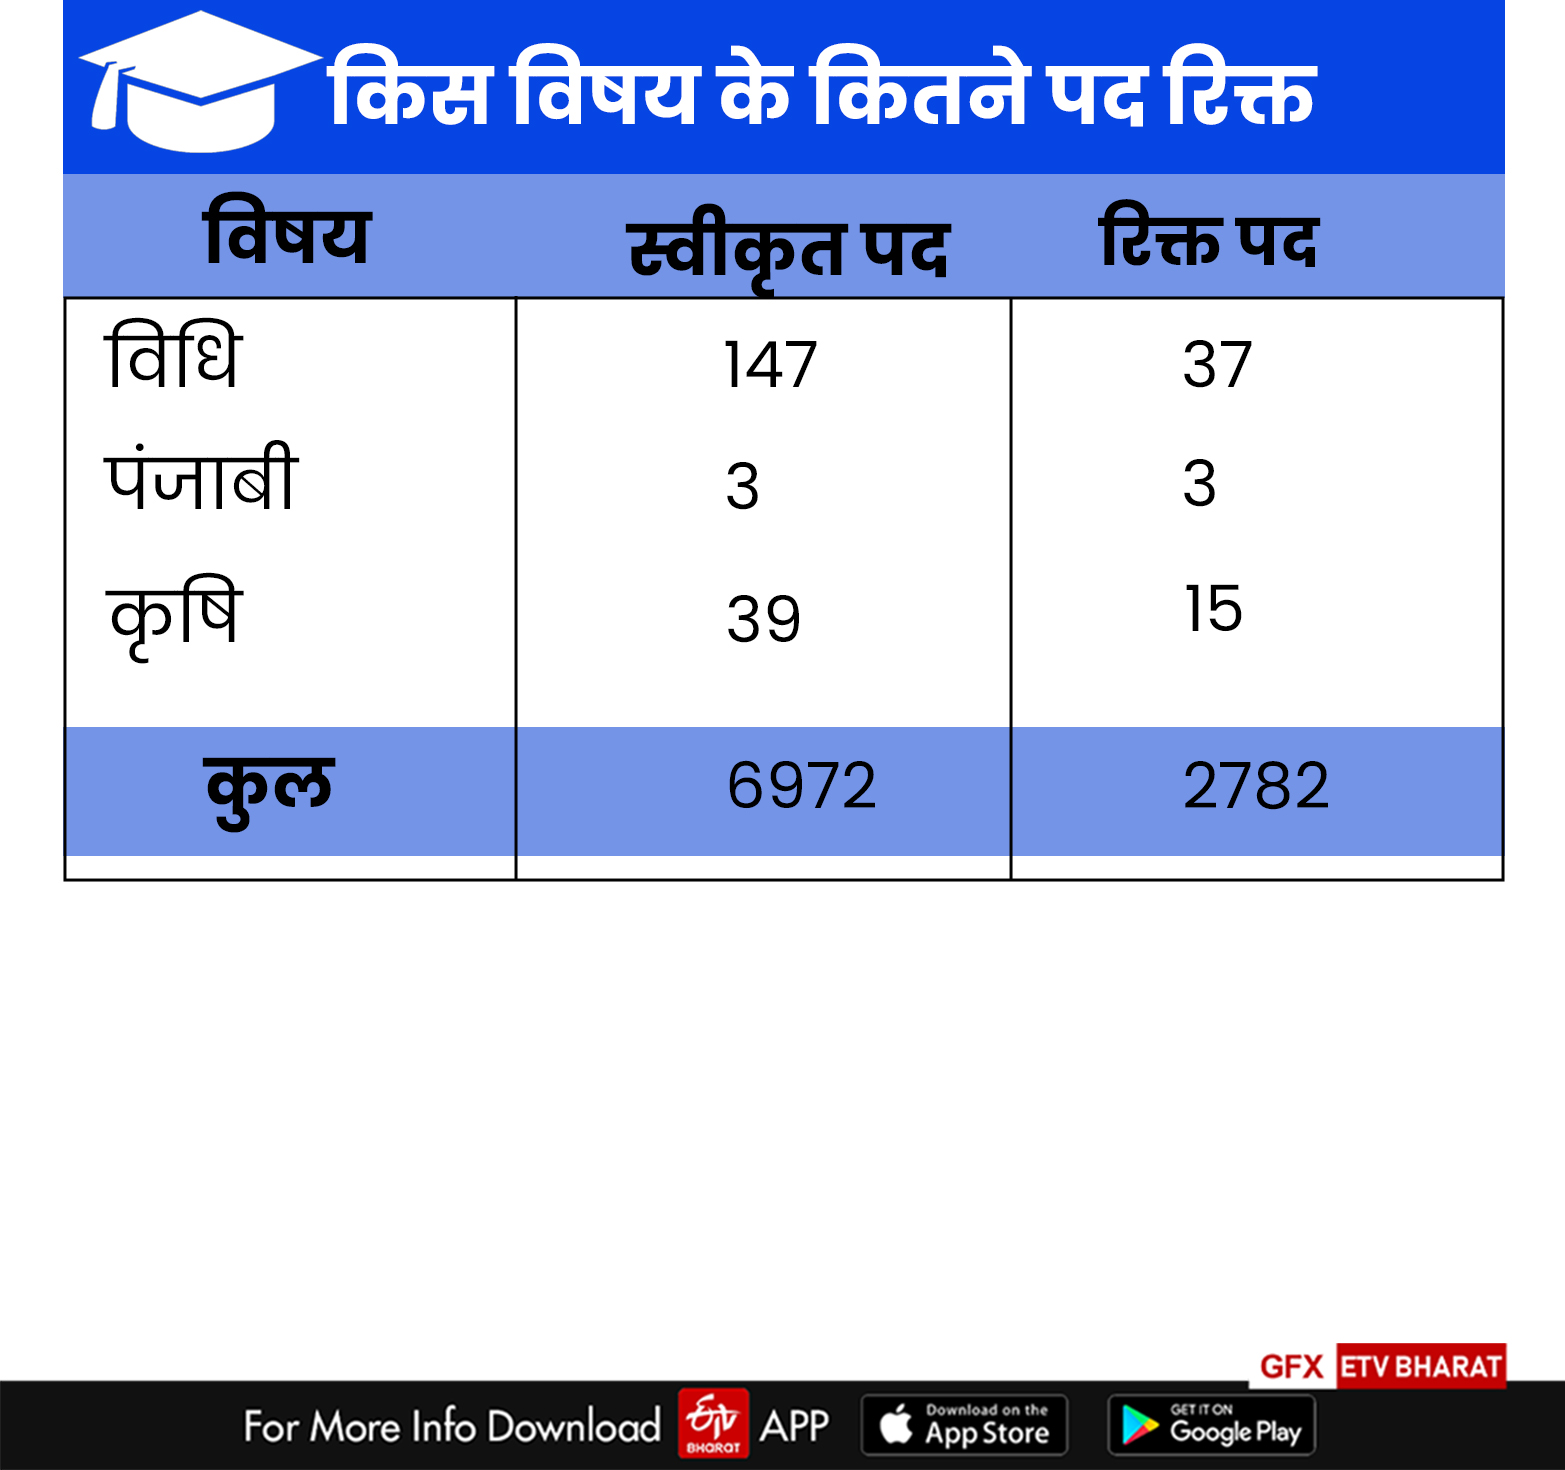 Rajasthan Higher education